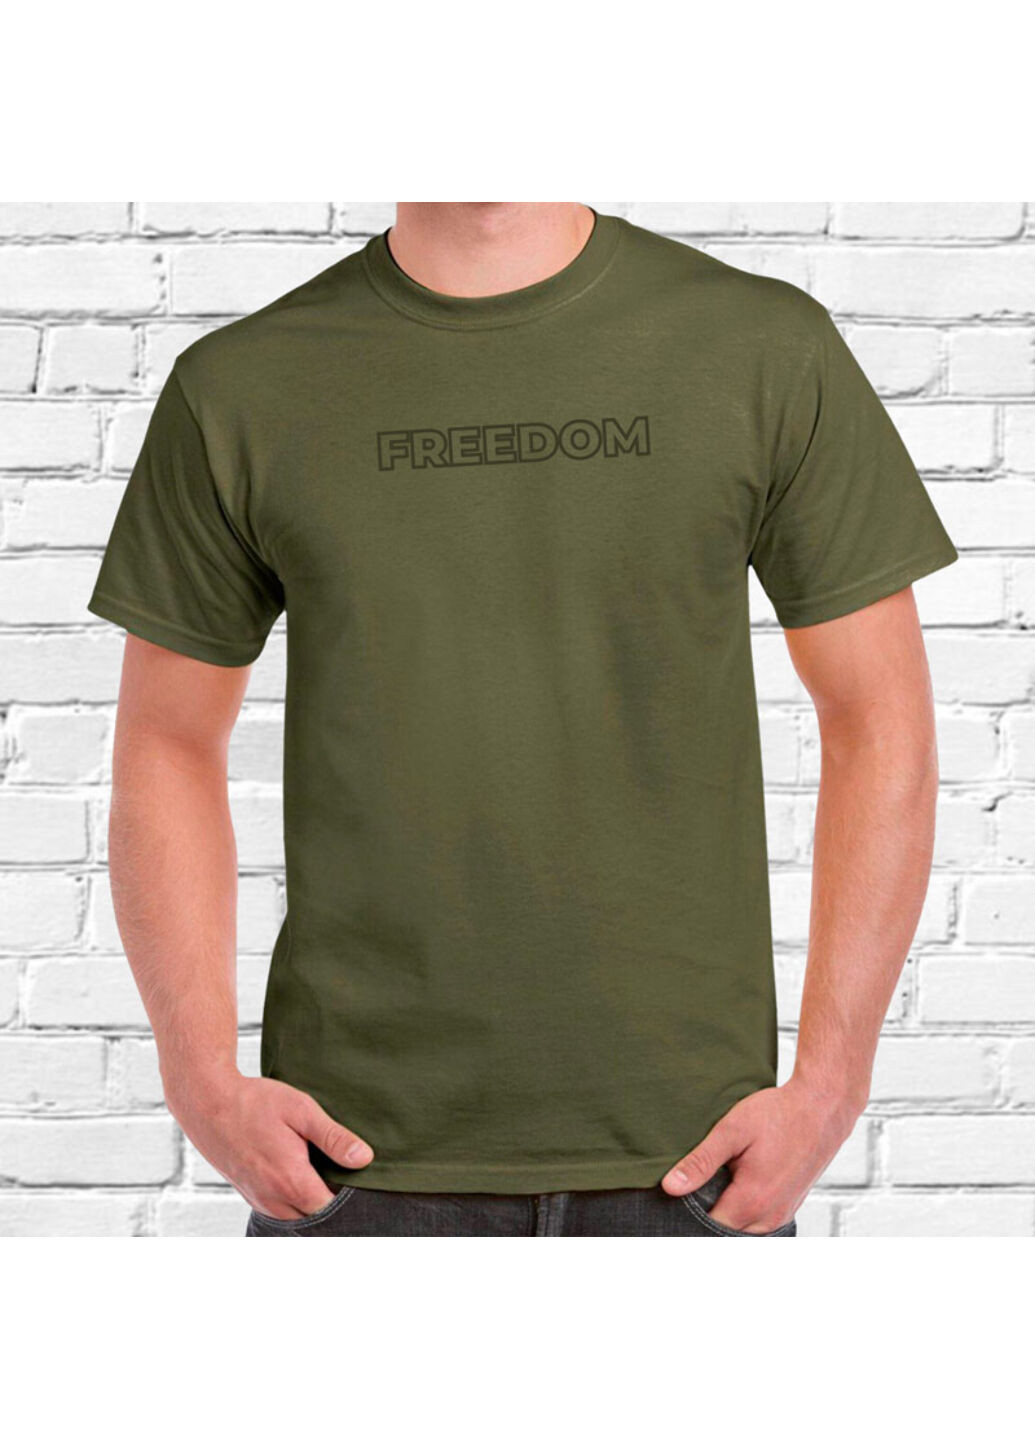 Хаки (оливковая) футболка з вишивкою зеленим freedom мужская хаки s No Brand